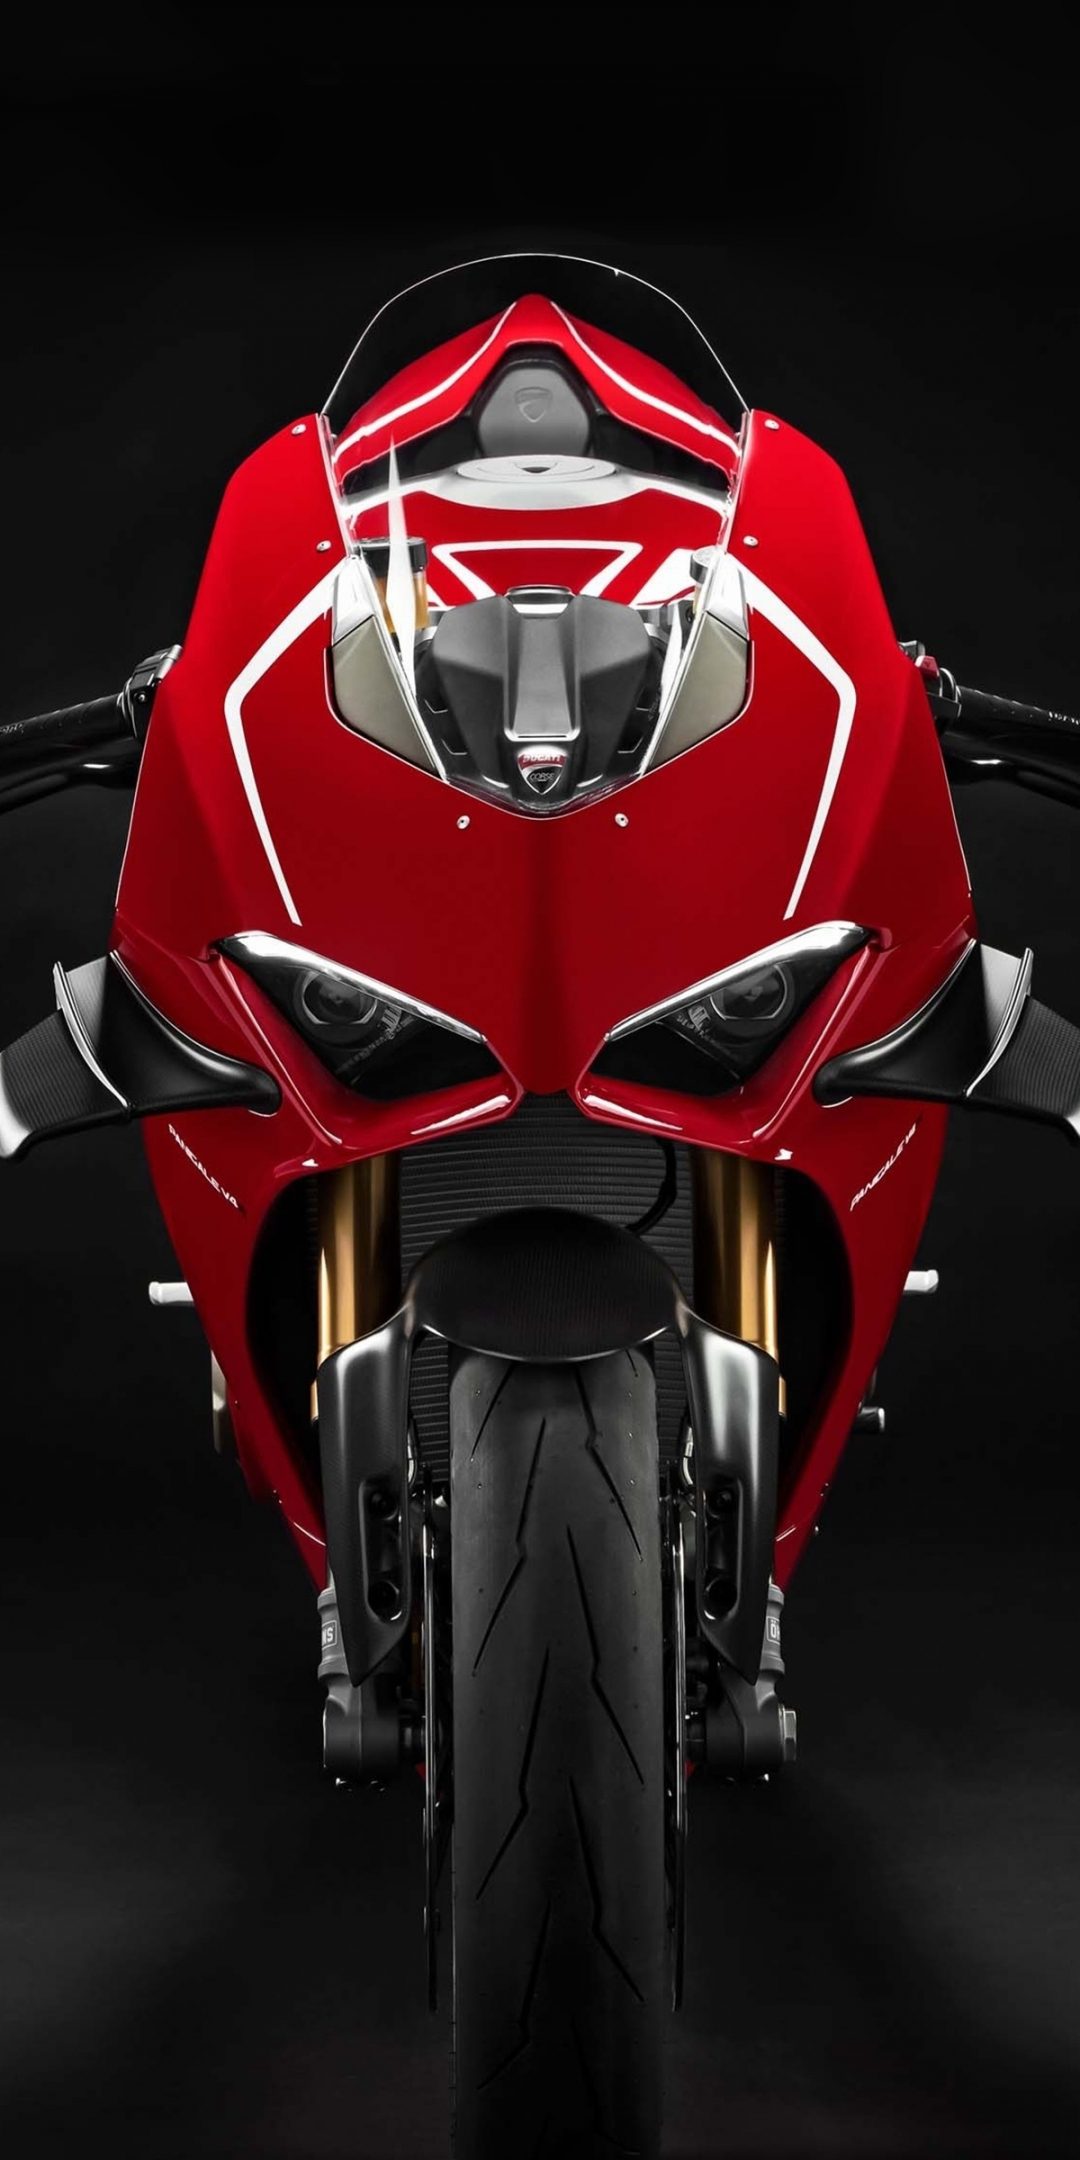 Ducati Panigale V4 R, sports bike, 1080x2160 wallpaper